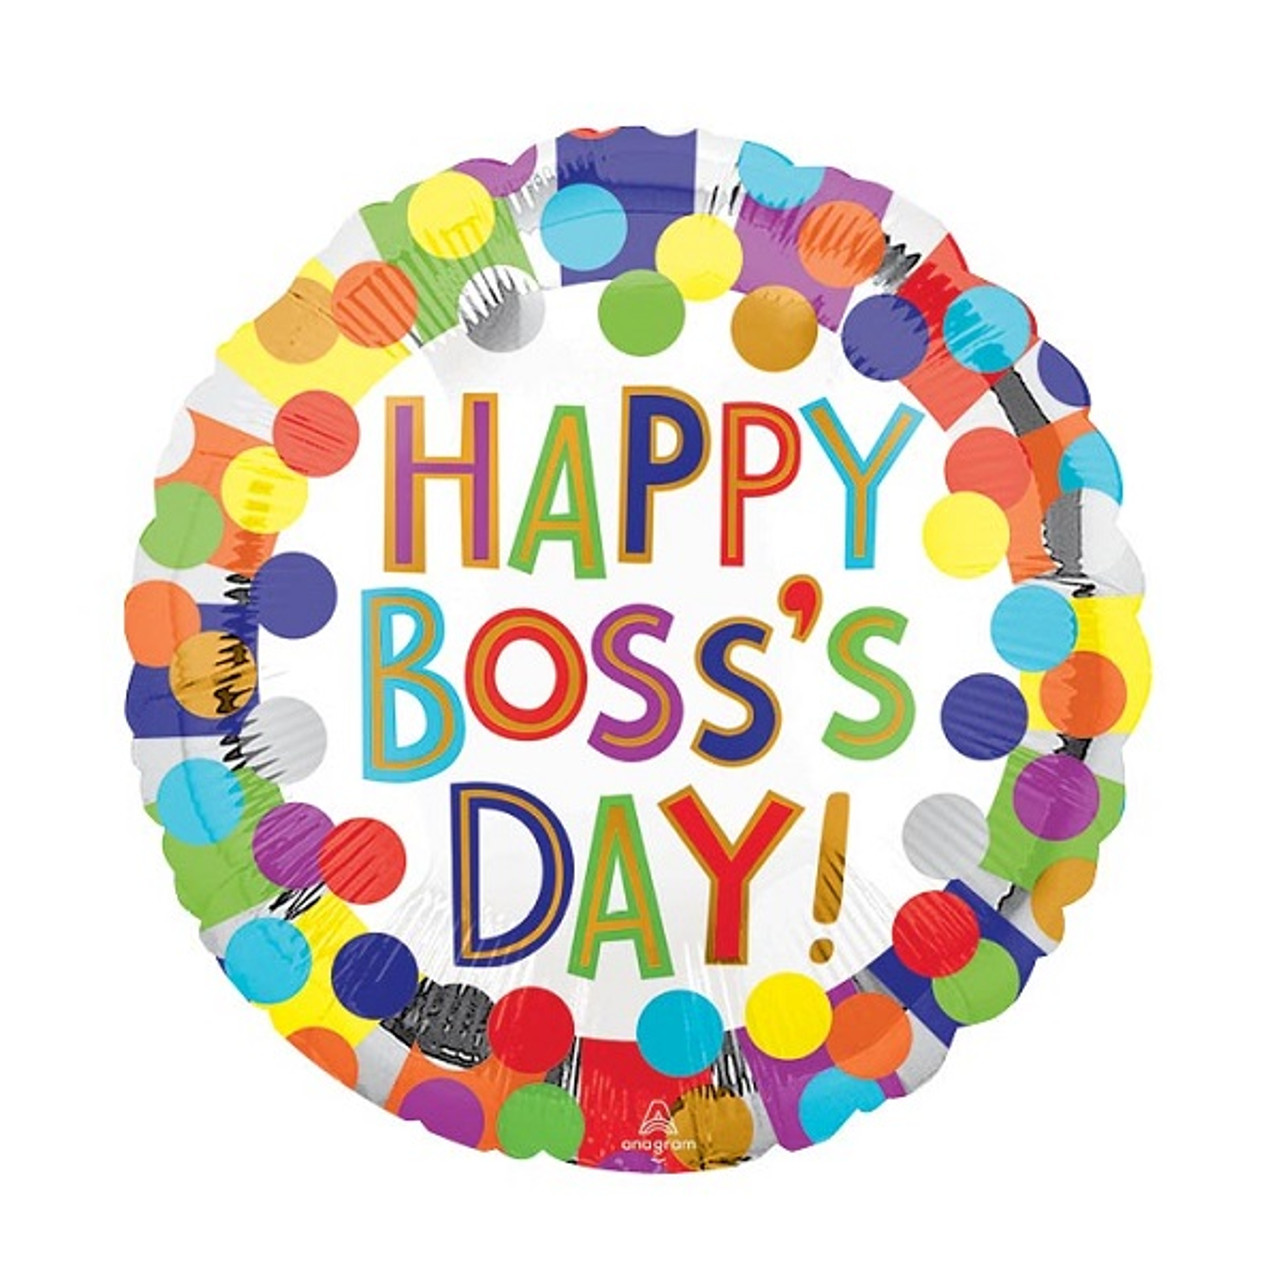 happy-boss-day-greeting-symbol-stock-illustration-download-image